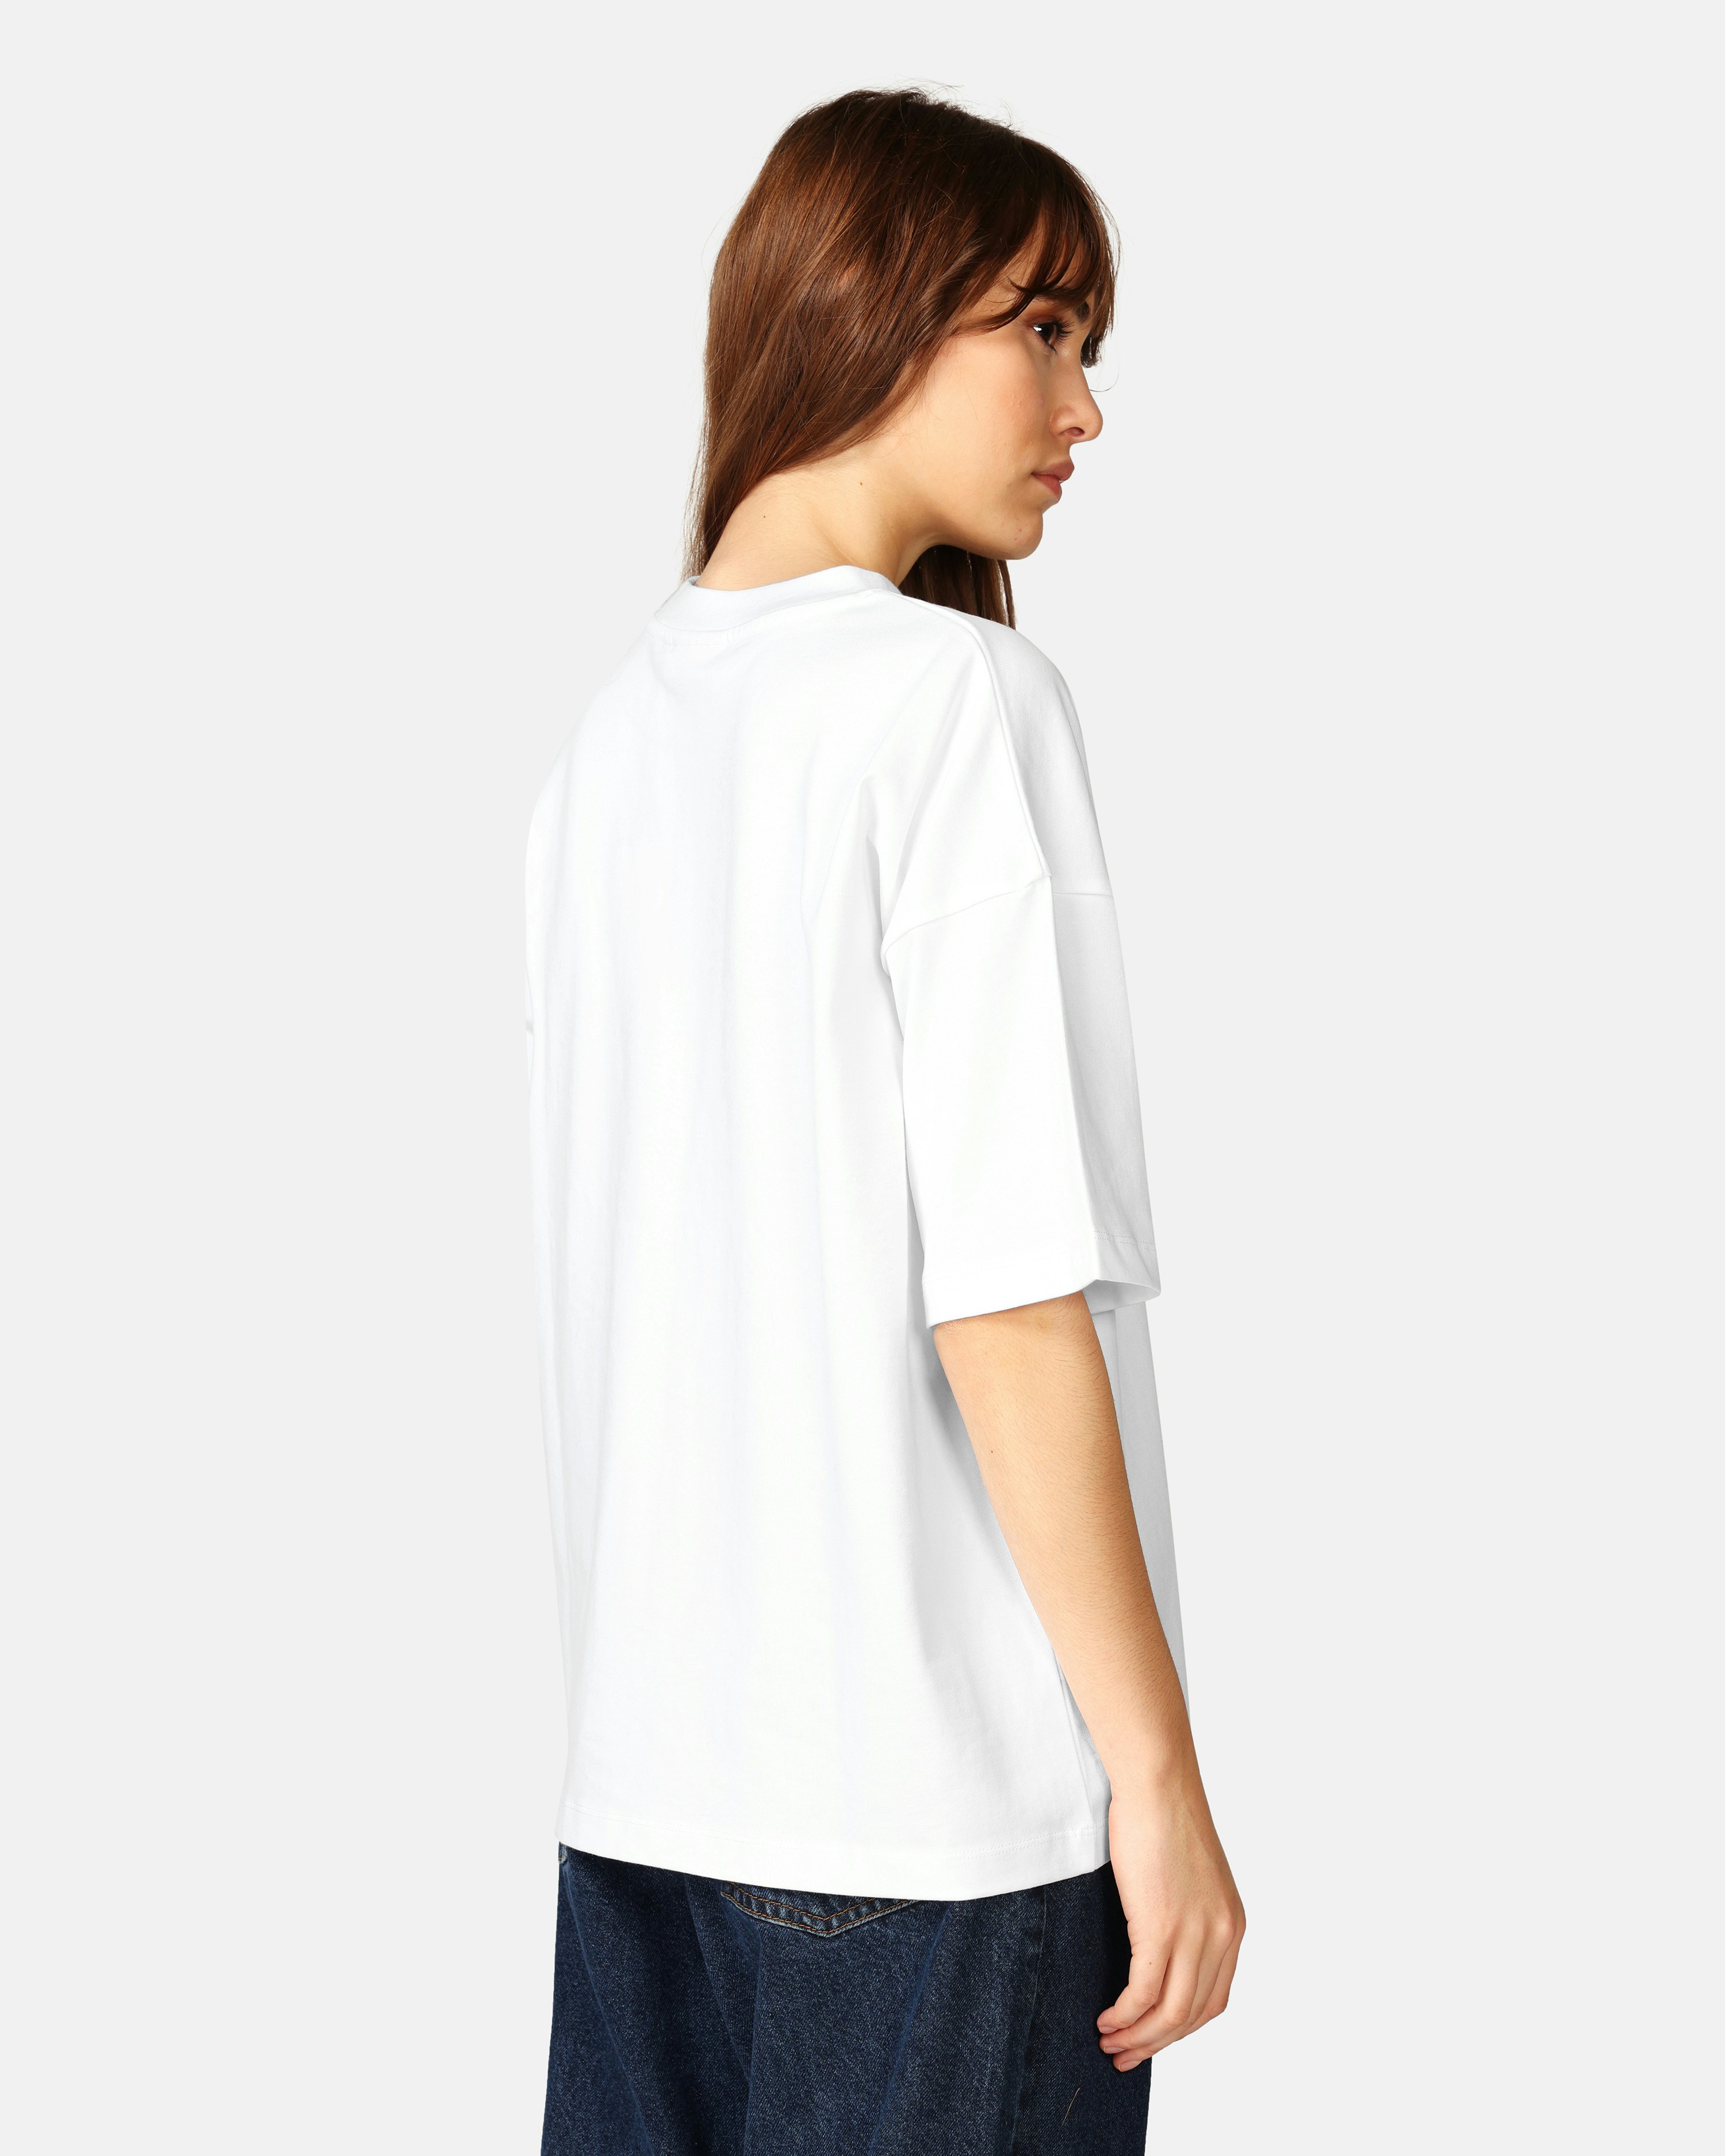 | T-Shirt MEDALS White Culture Unisex Junkyard BEYOND |